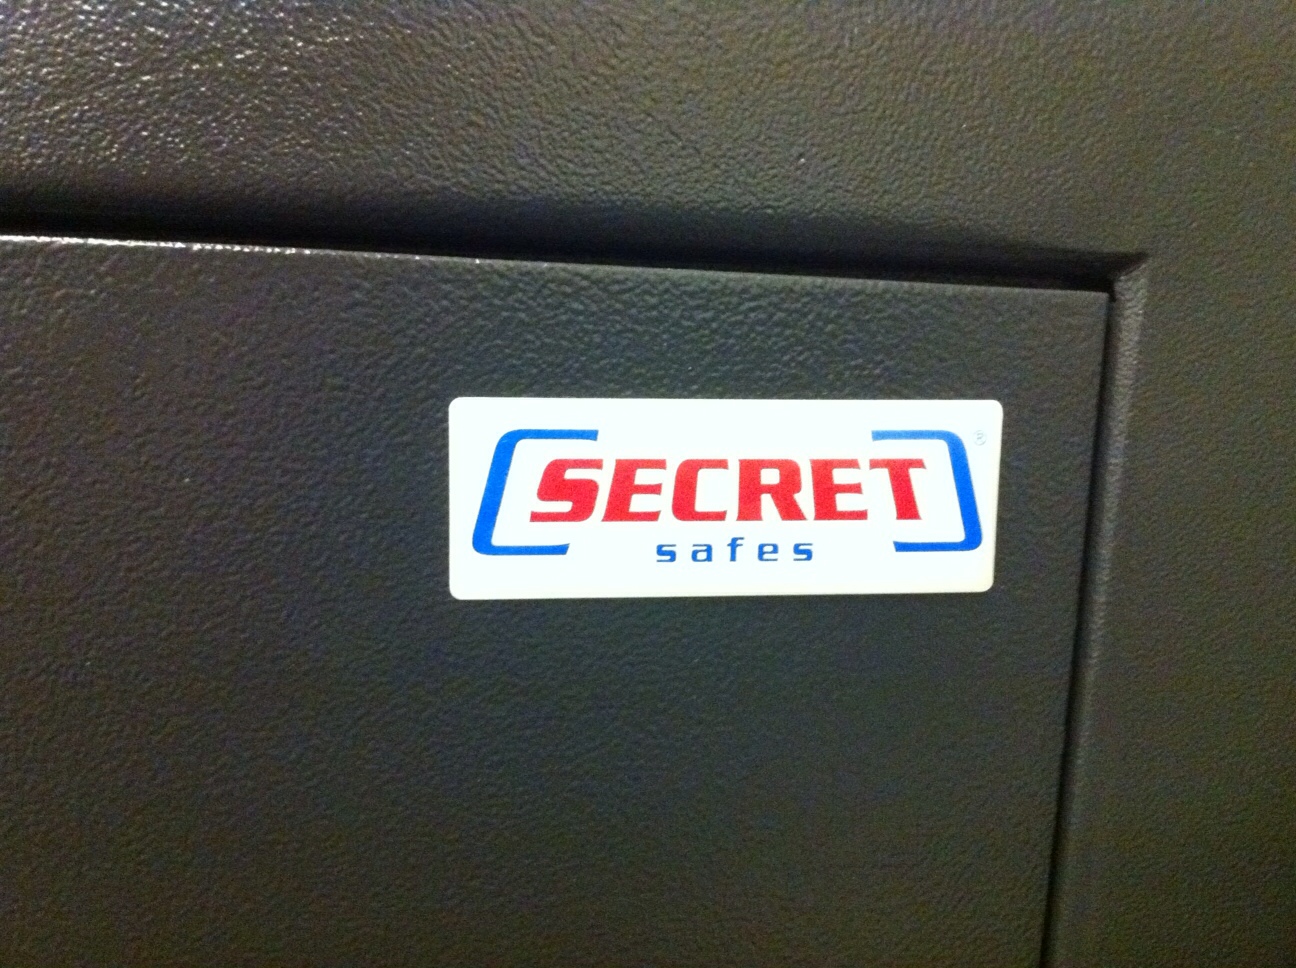 1935: Secret Safes